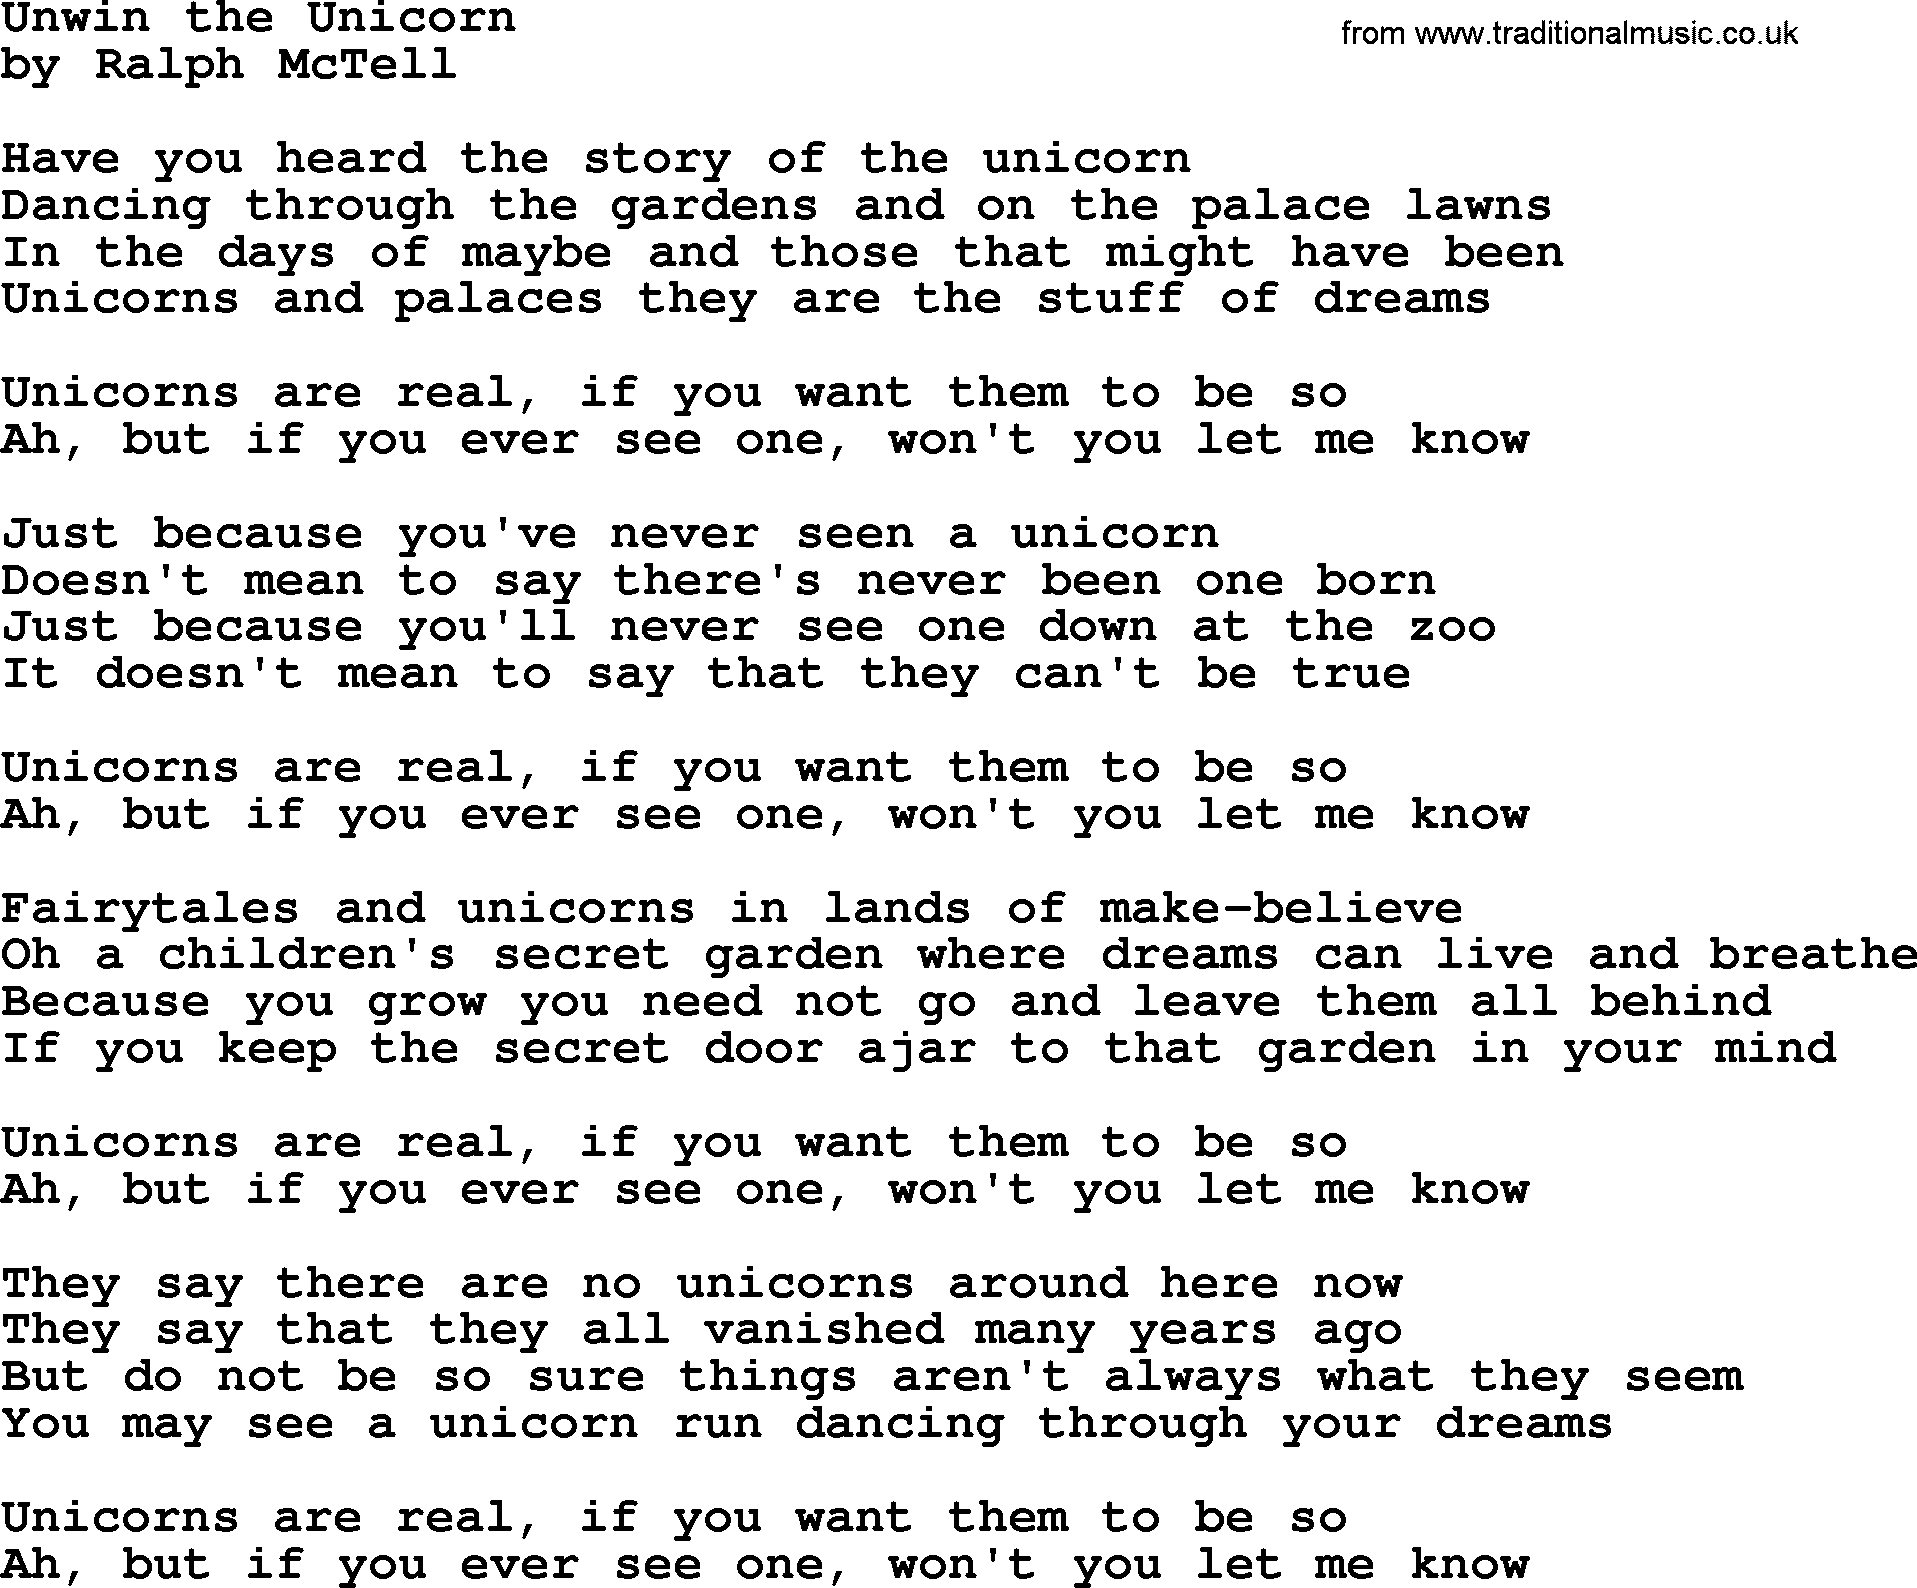 Informeer eetbaar Hiel Unwin The Unicorn.txt - by Ralph McTell lyrics and chords